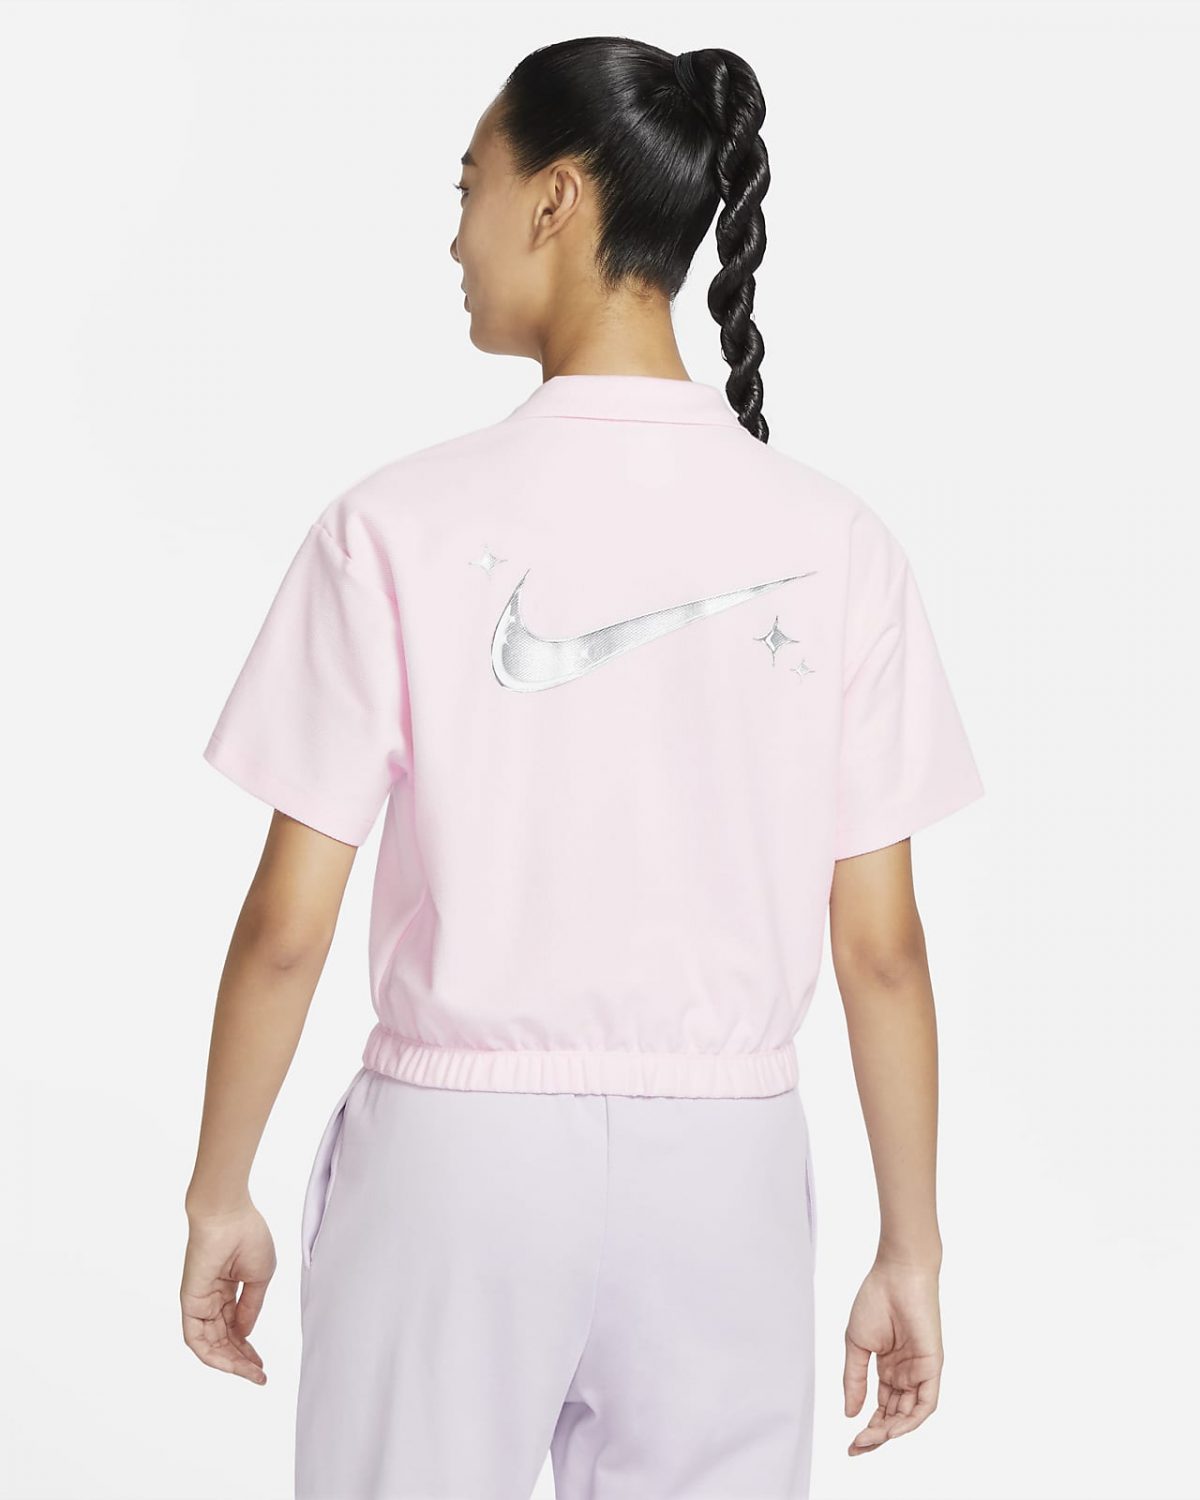 Женский топ Nike Air розовый фото